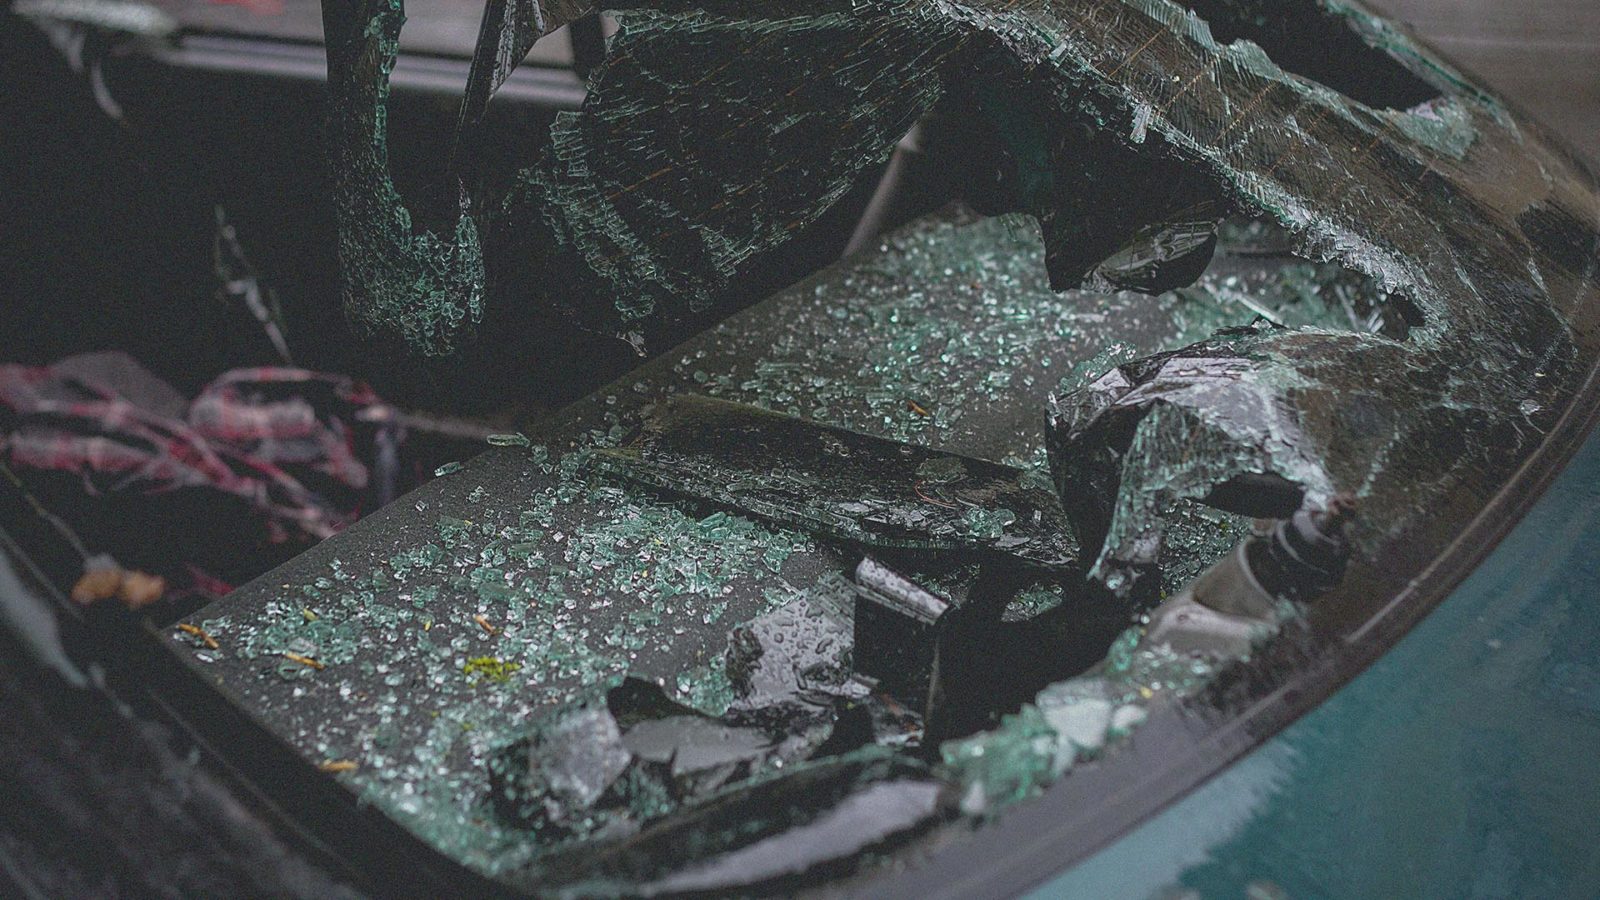 broken windshield of a vehicle